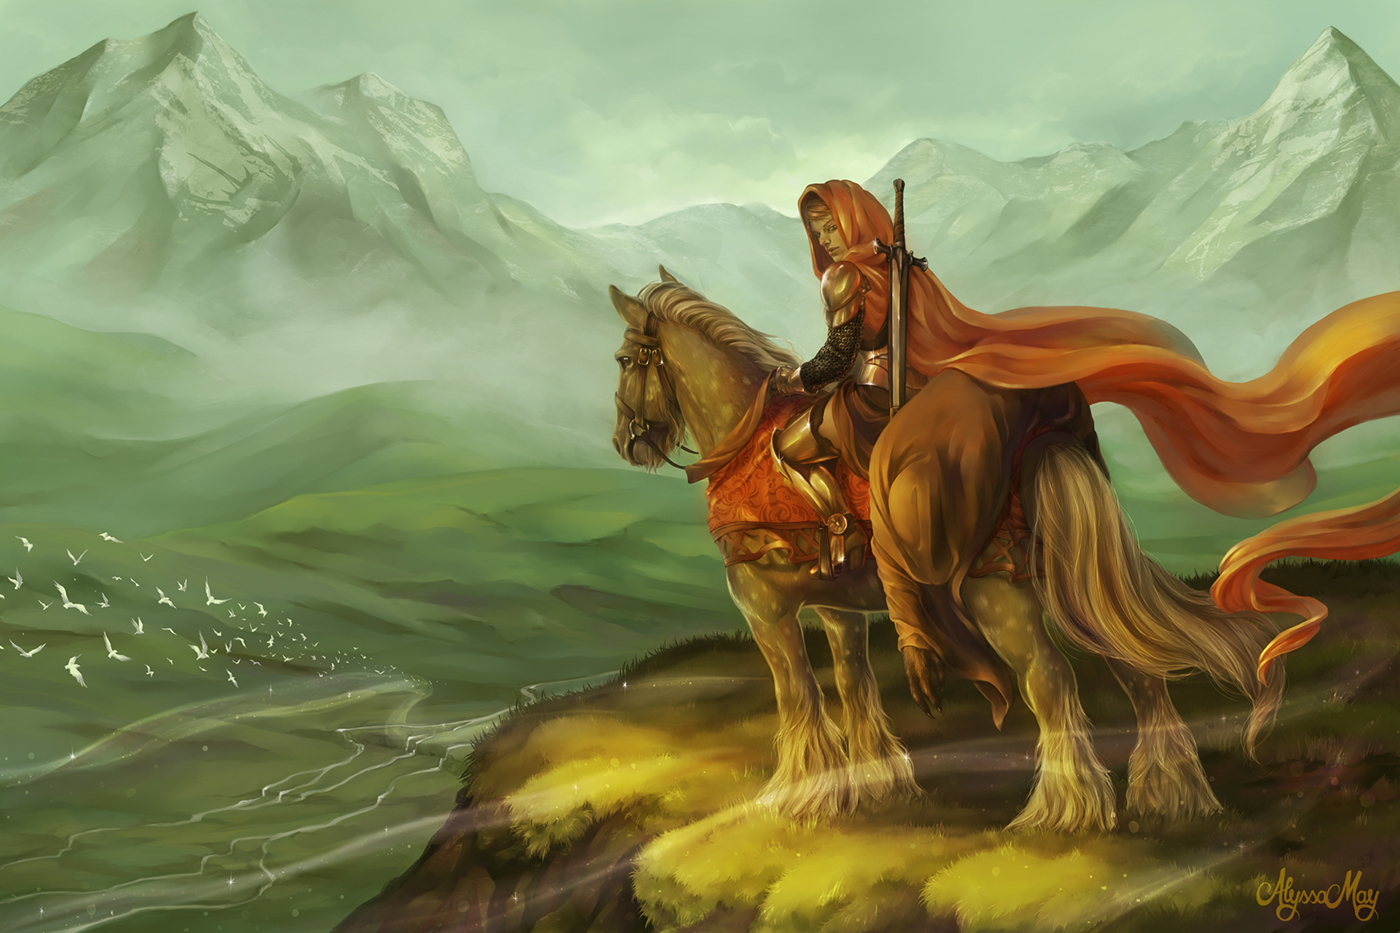 digital painting fairy tale fantasy Landscape figure cloth Time Lapse process video warrior knight